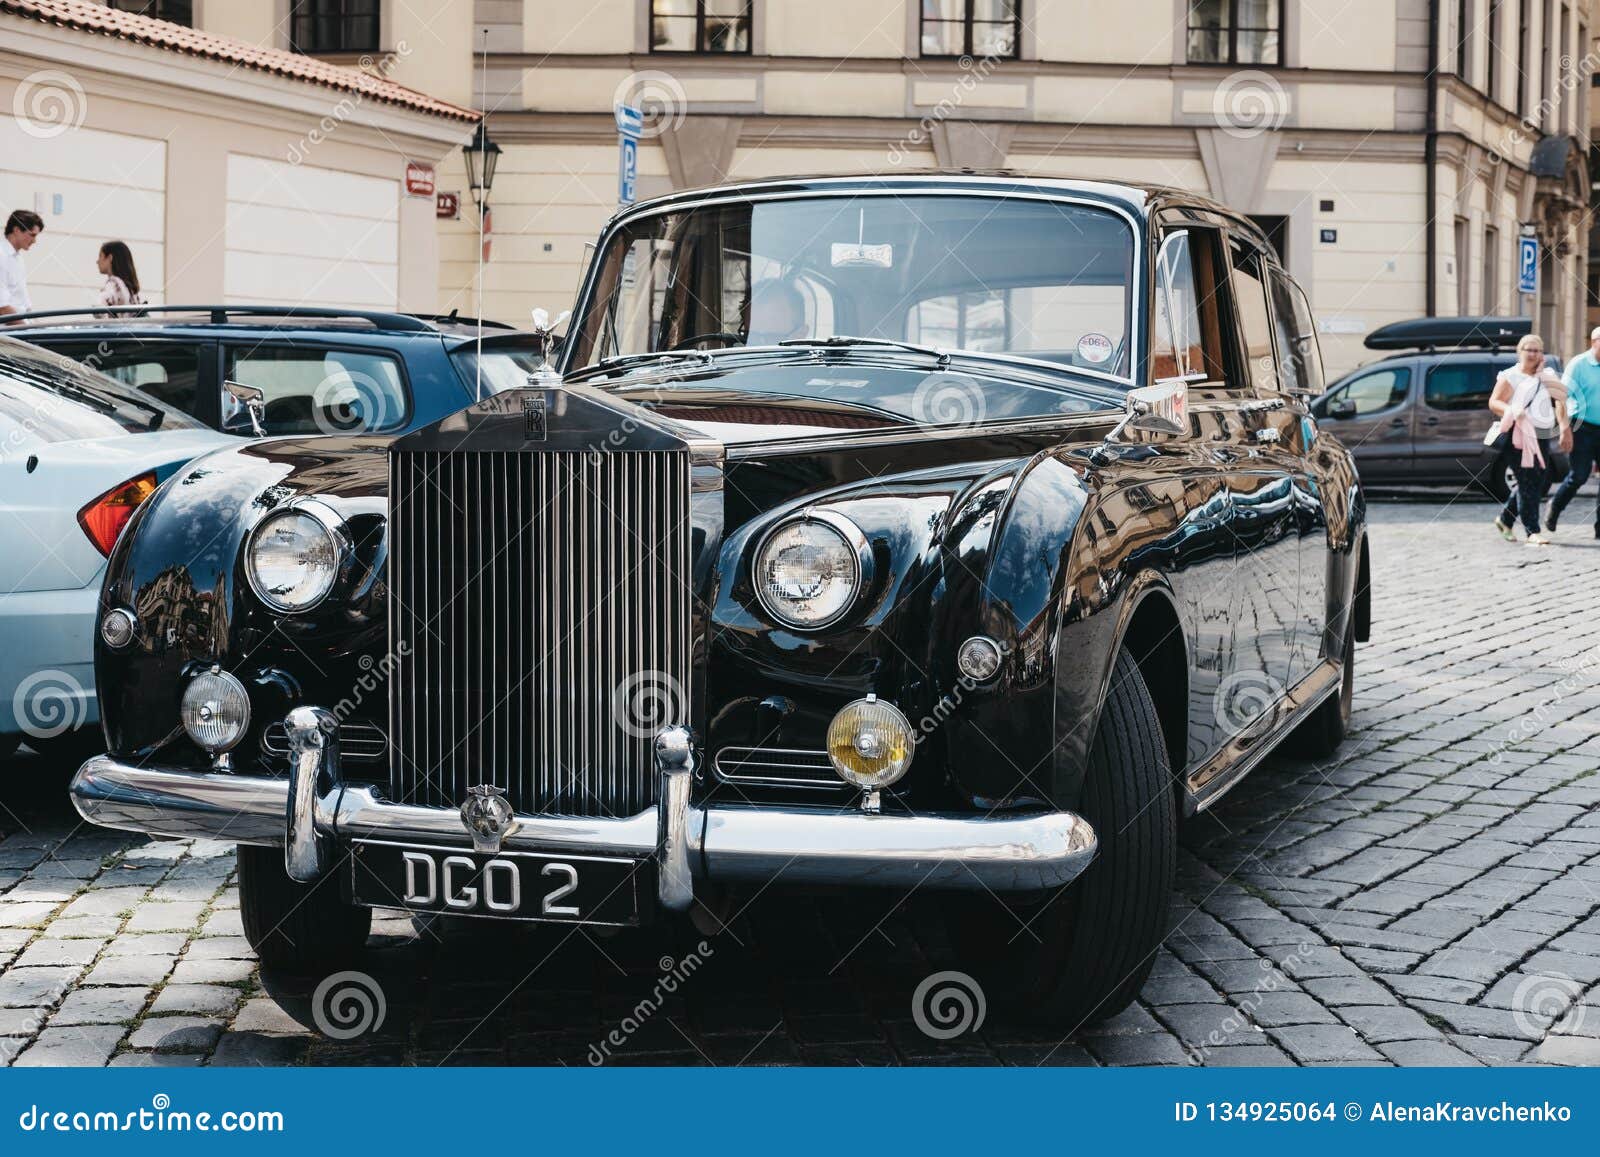 Old Black Rolls Royce Car On A Street In Prague Czech Republic Editorial Stock Image Image Of Czech Antique